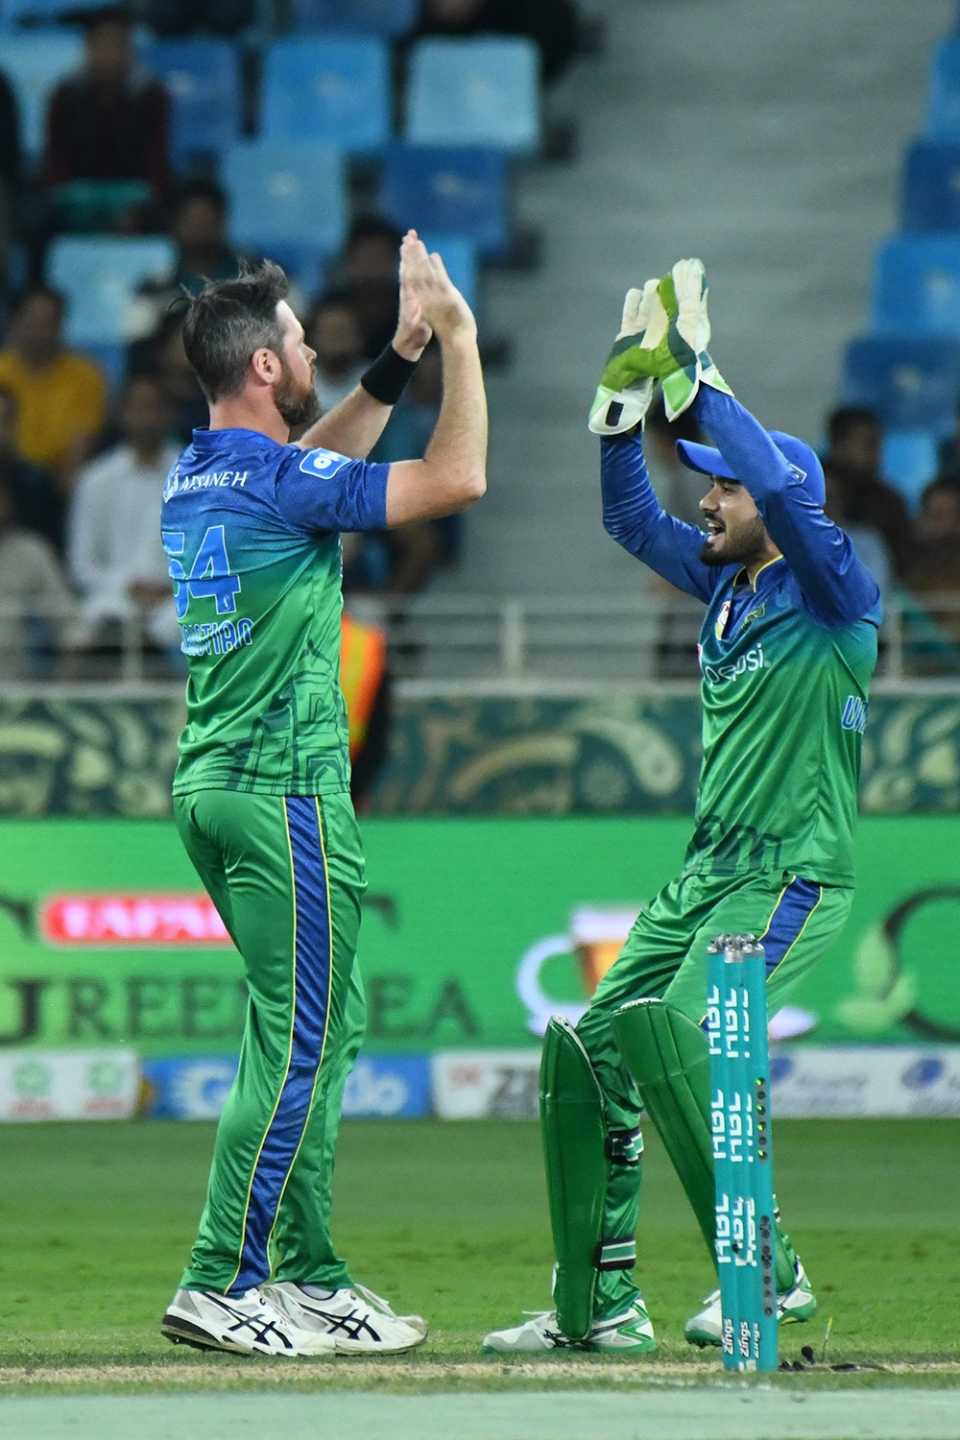 Dan Christian picked up three wickets, Islamabad United v Multan Sultans, Pakistan Super League 2018-19, Dubai, February 26, 2019